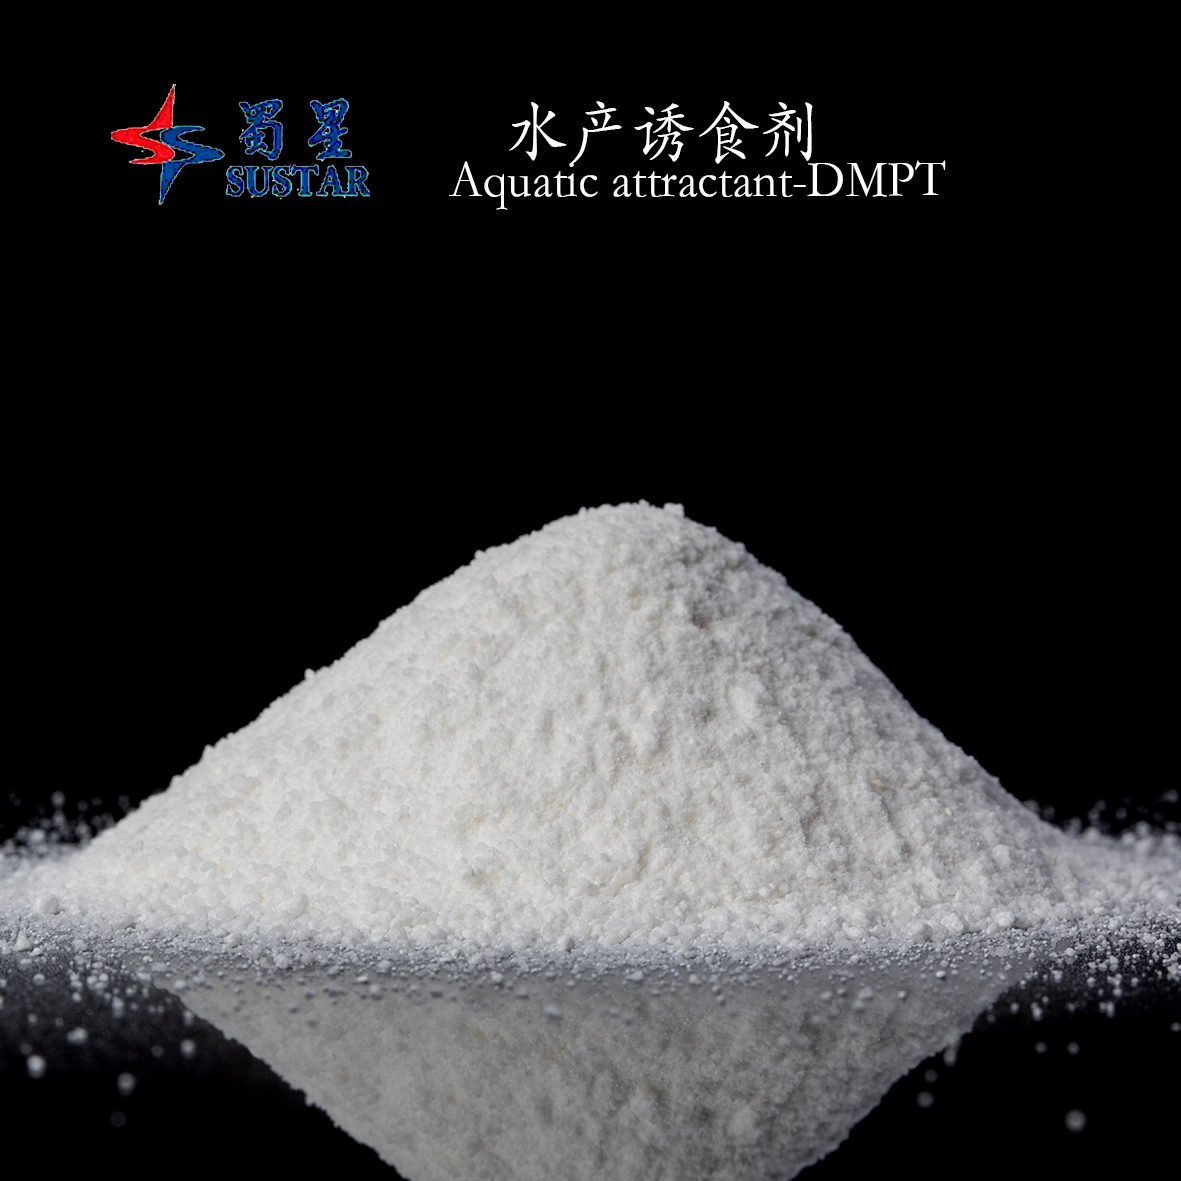 DMPT Dimethyl-Beta-Propiothetin Aquapro Aquatic Attractant White Crystalline Powder